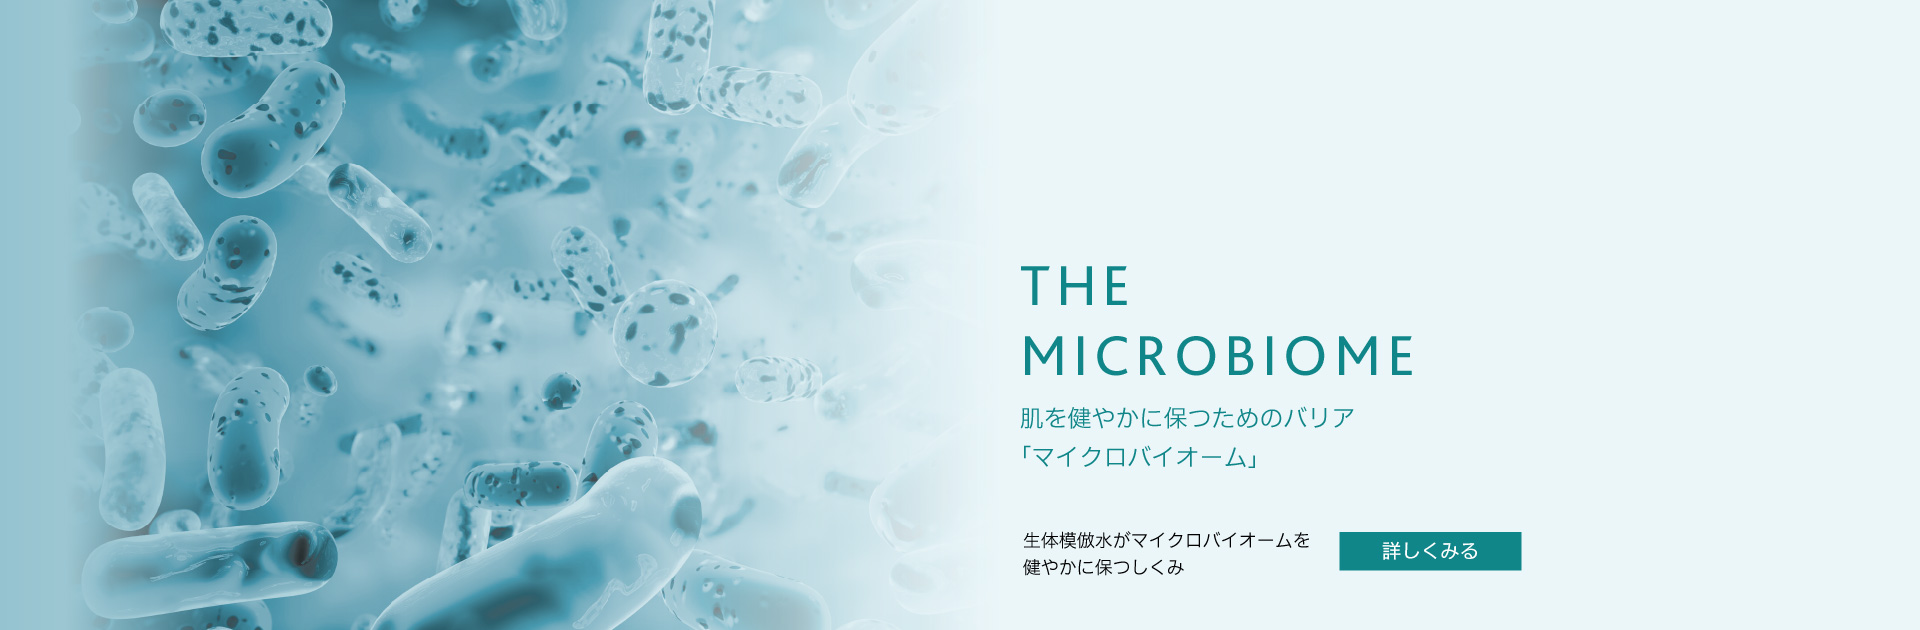 THE MICROBIOME 肌を健やかに保つためのバリア